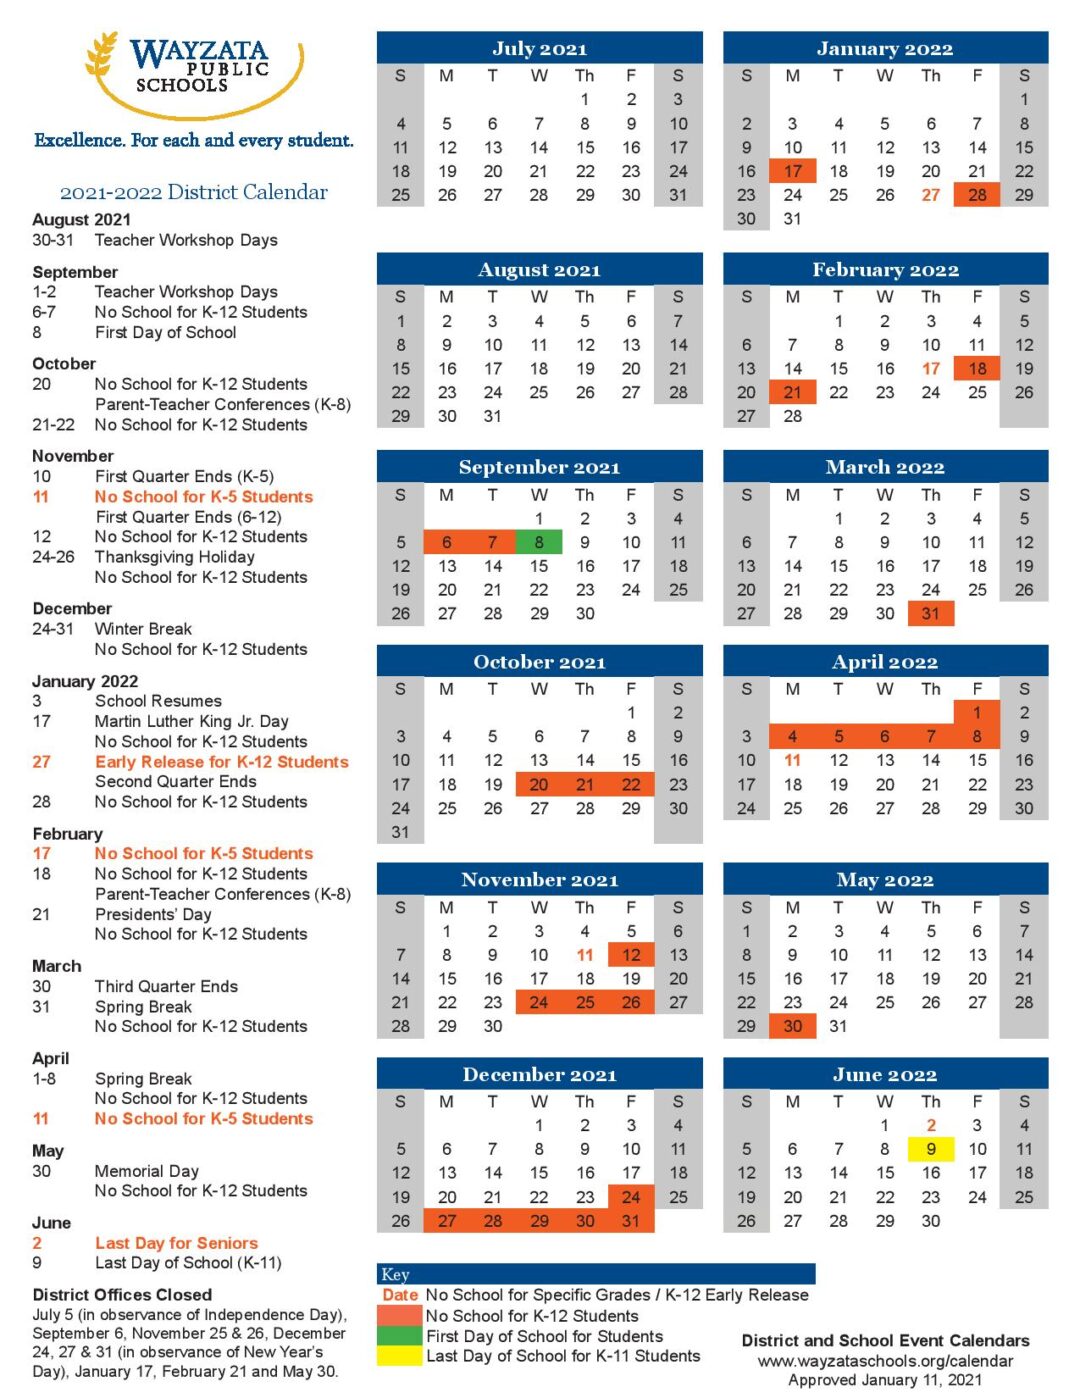 Wayzata Public Schools Calendar 20212022 in PDF